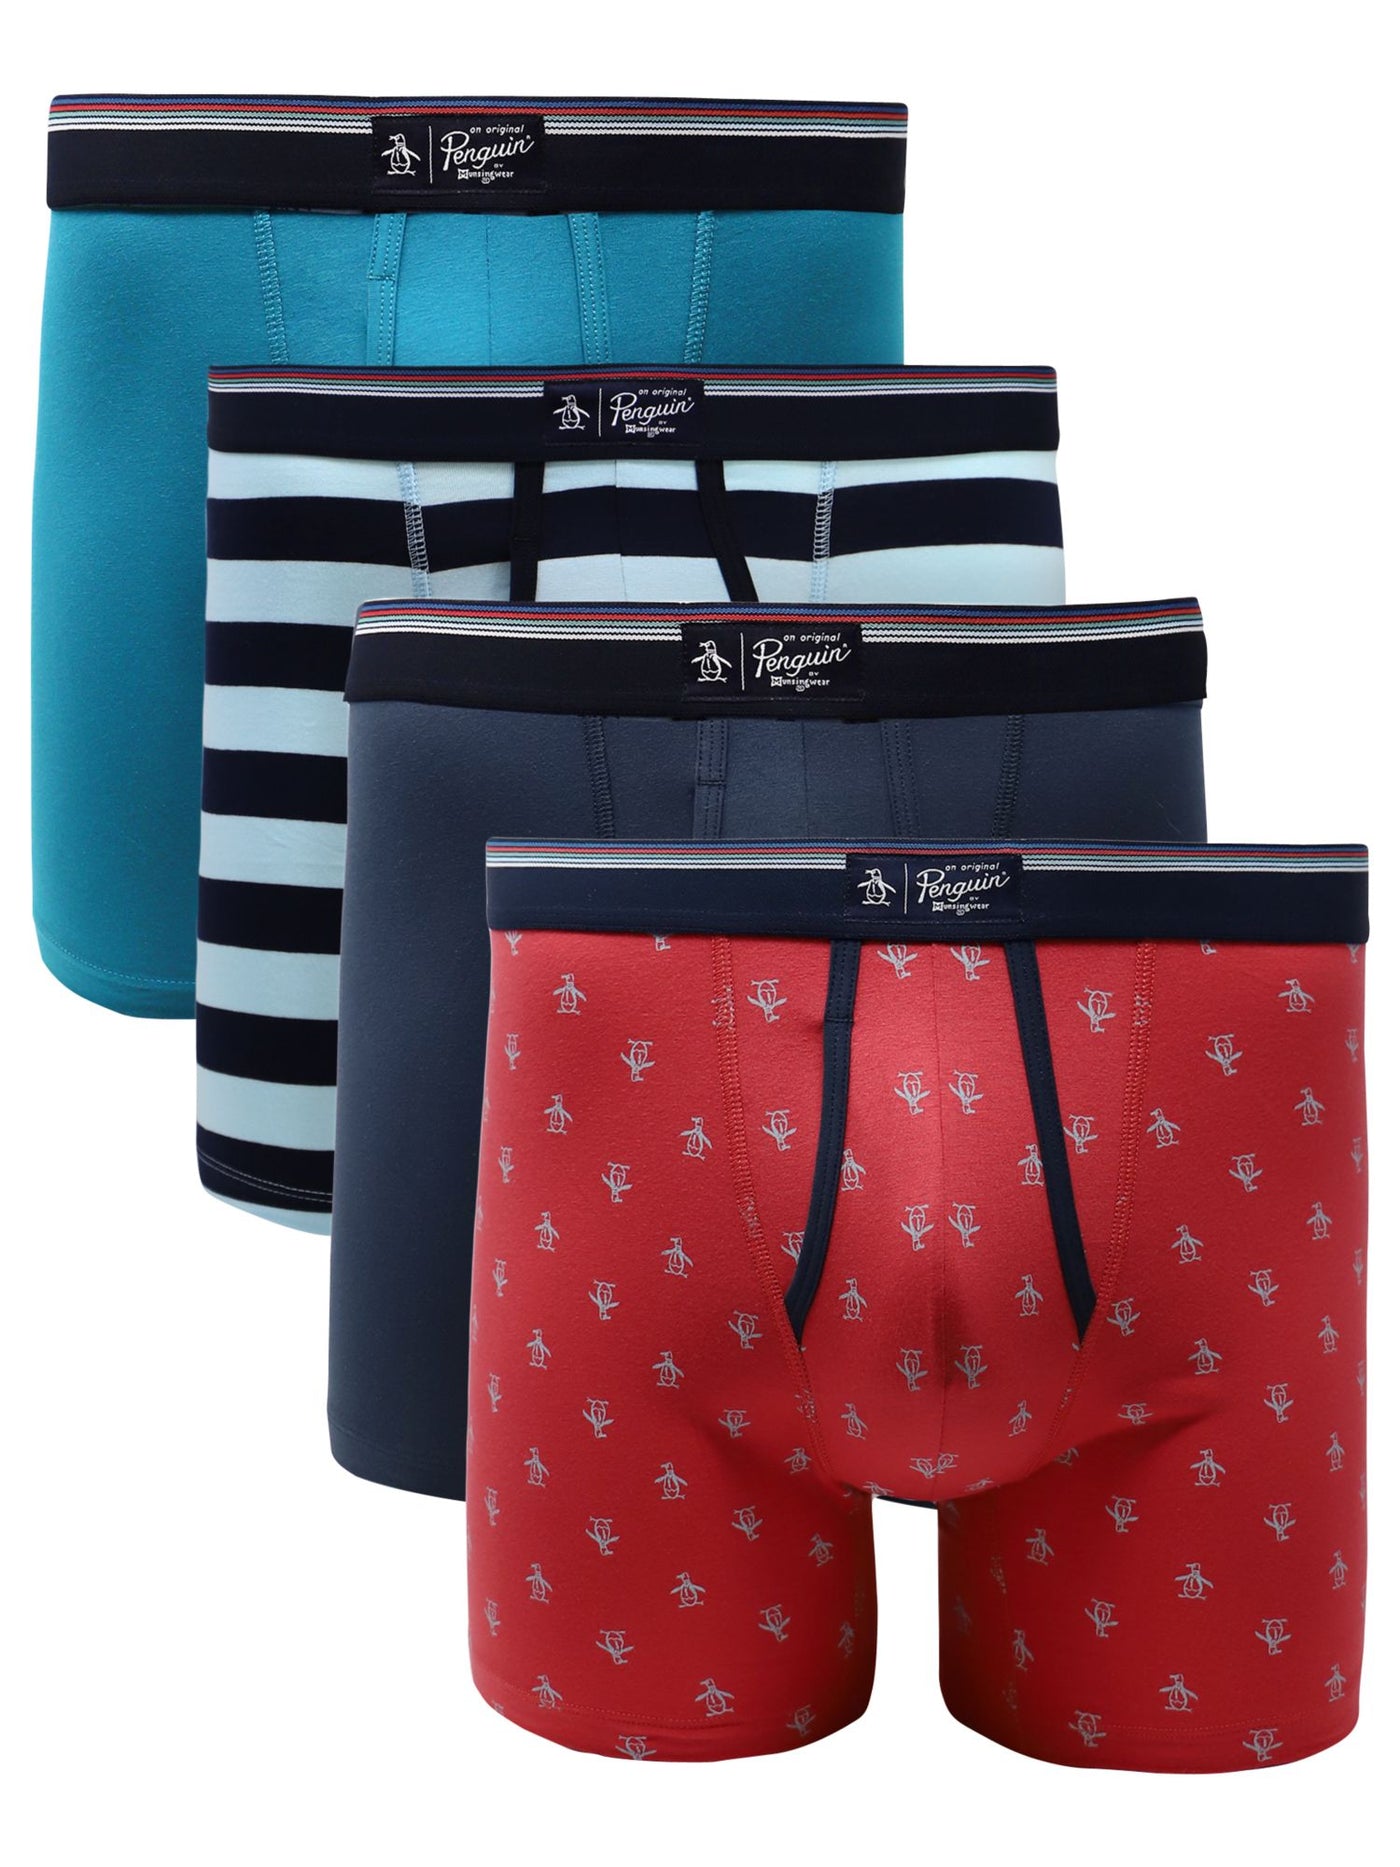 PENGUIN Intimates 4 Pack Navy Boxer Brief Underwear L